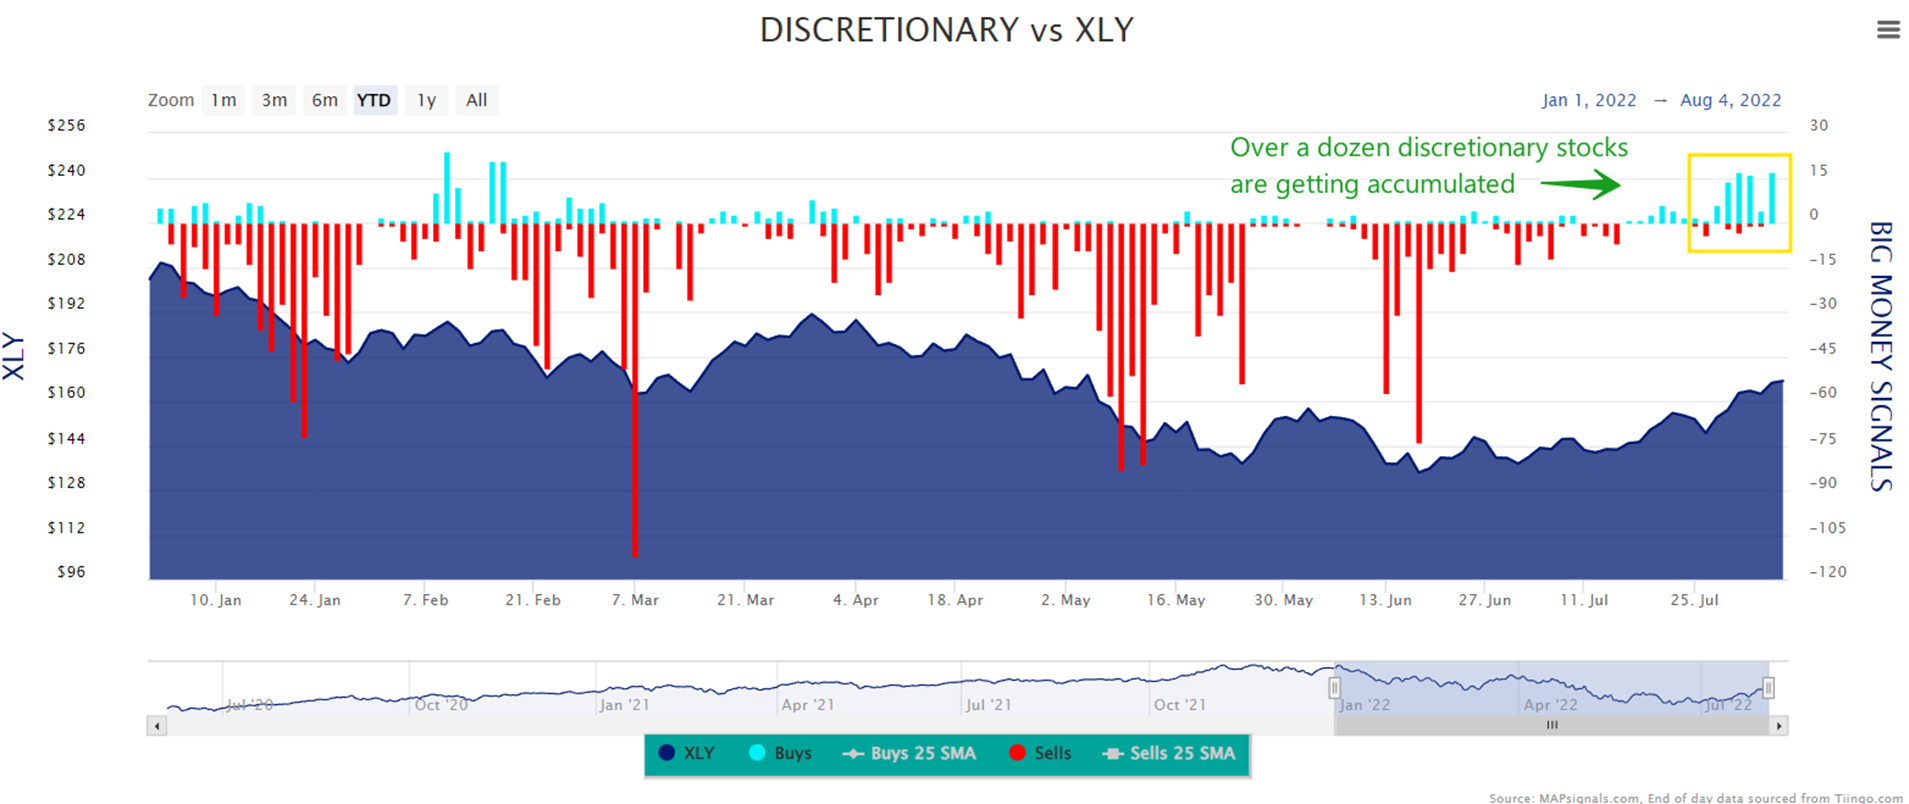 Over a dozen discretionary stocks are getting accumulated | Discretionary vs XLY